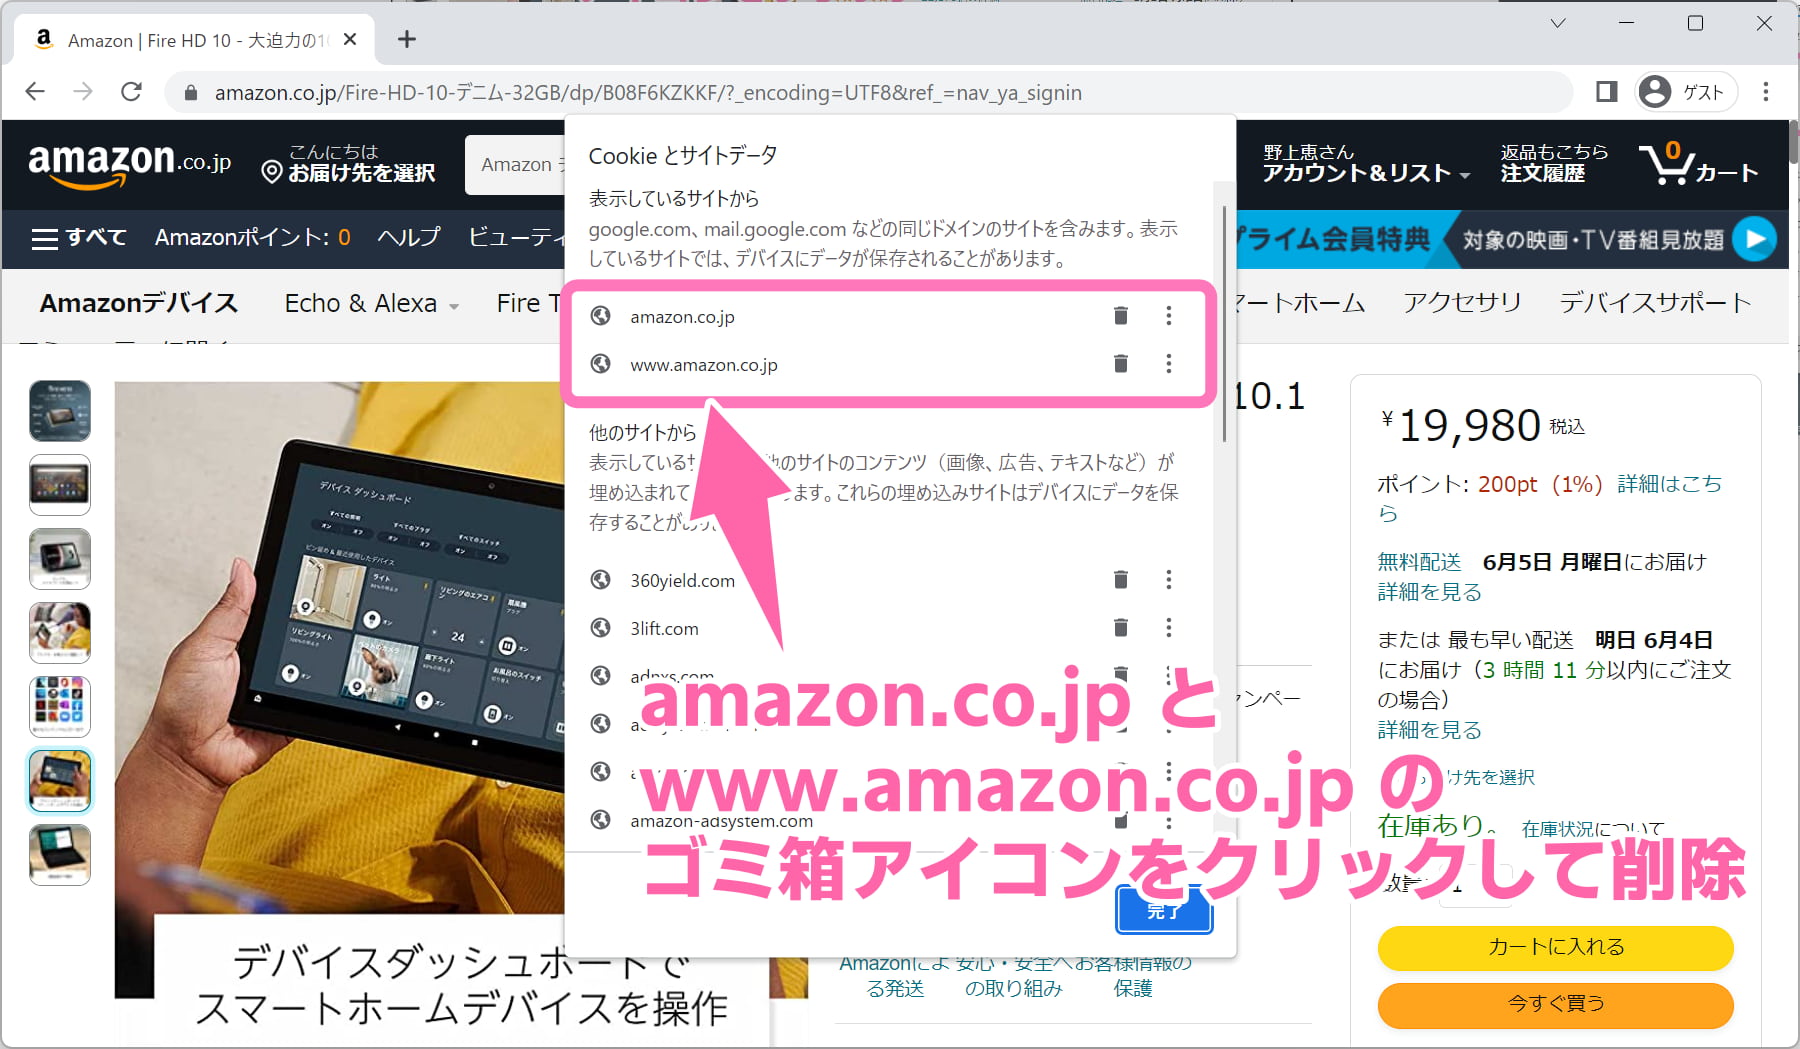 amazon.co.jp と www.amazon.co.jp のゴミ箱アイコンをクリックして削除